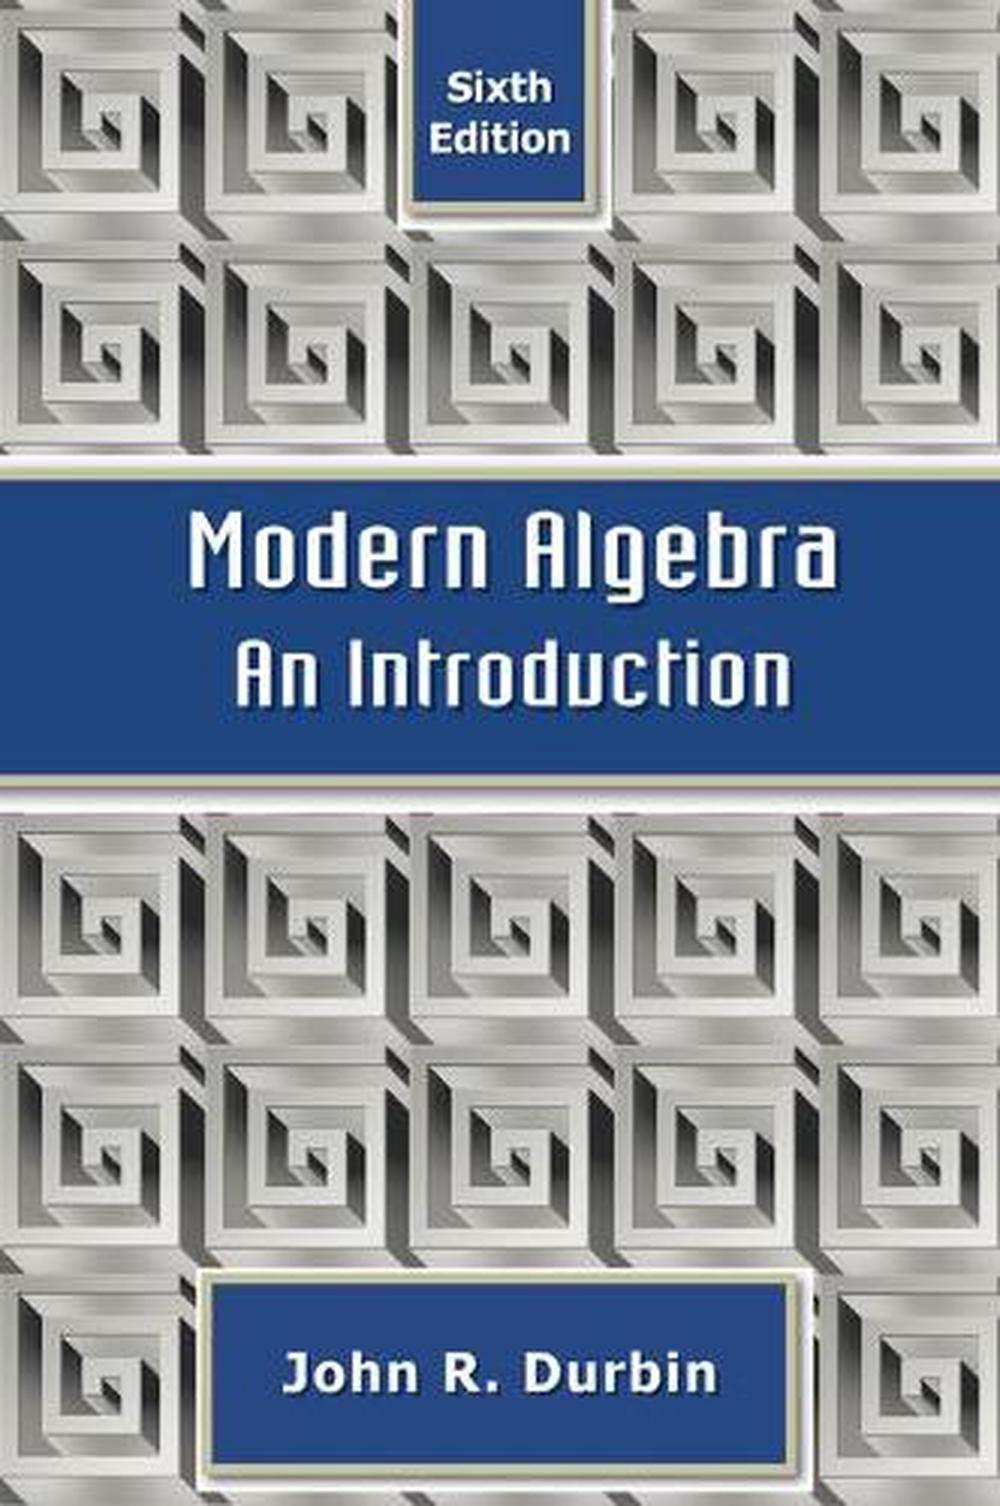 Modern Algebra An Introduction by John R. Durbin (English) Hardcover Book Free 9780470384435 eBay